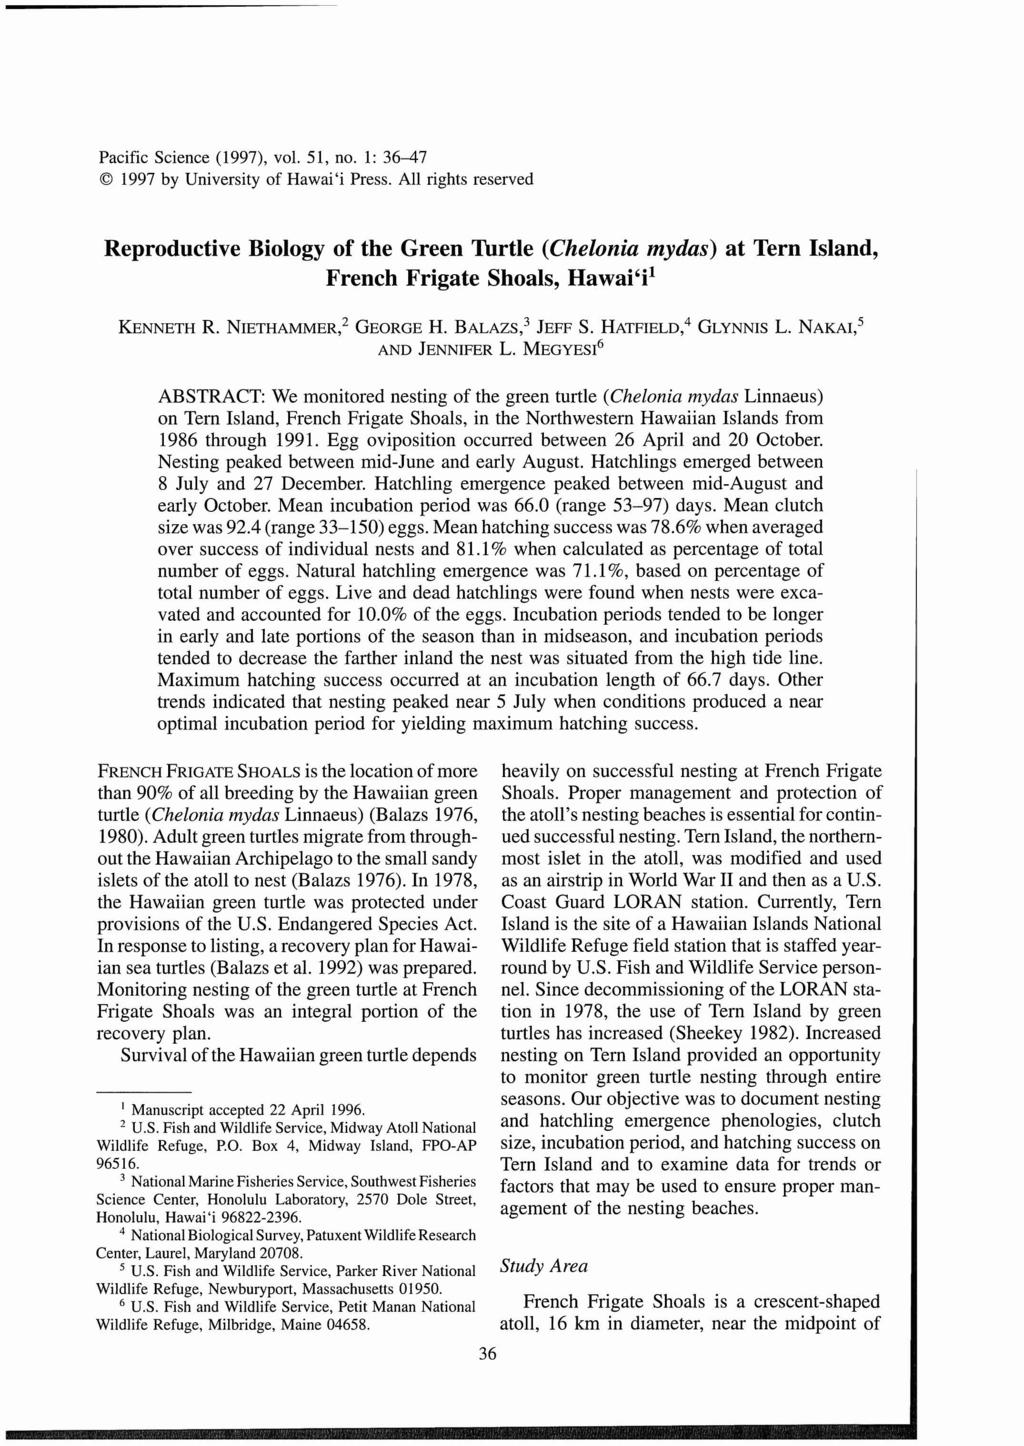 Pacific Science (1997), vol. 51, no. 1: 36-47 1997 by University of Hawai'i Press.